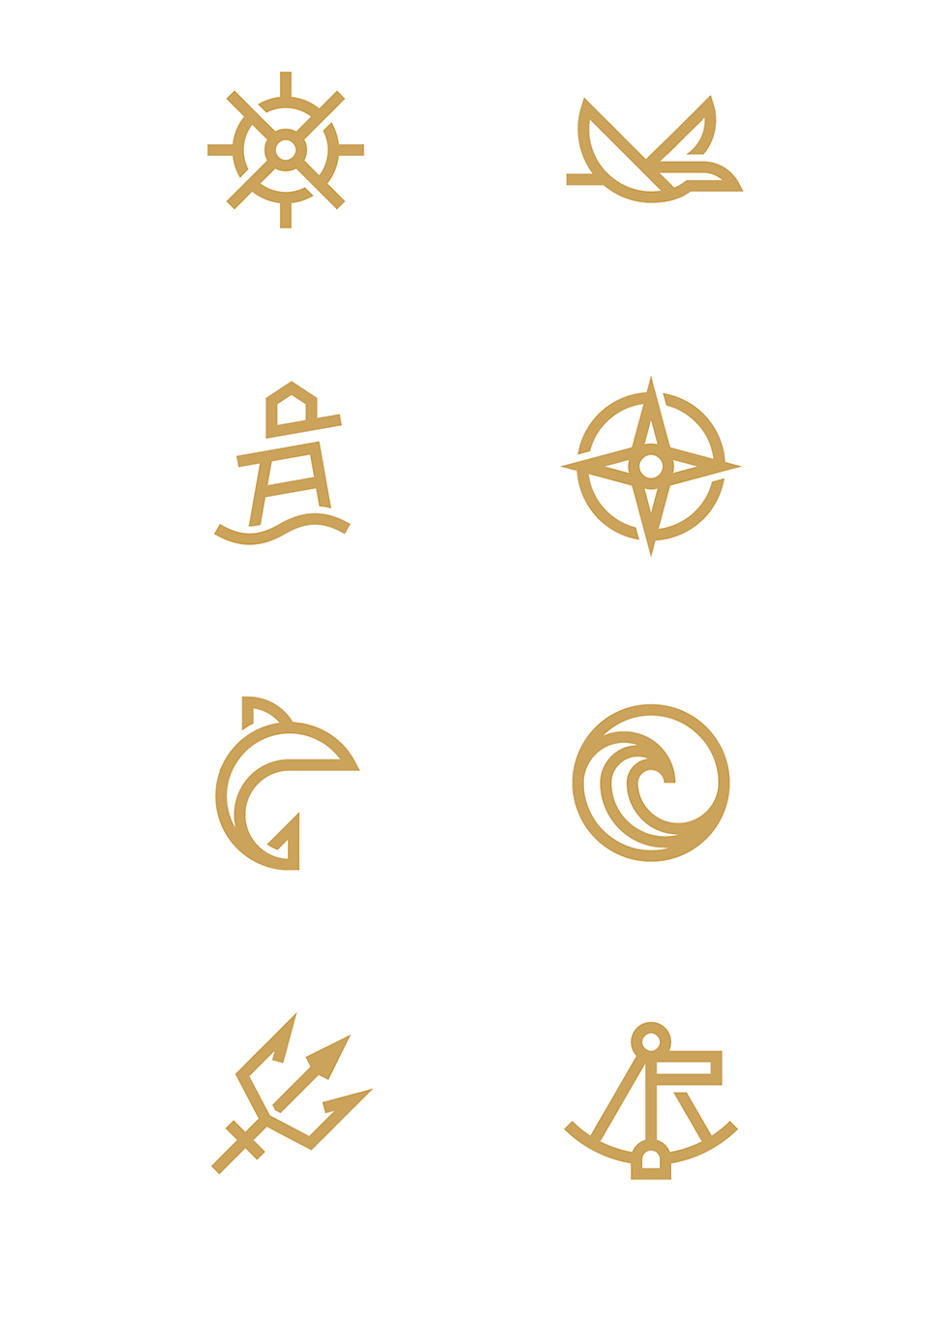 Nautical icon designs